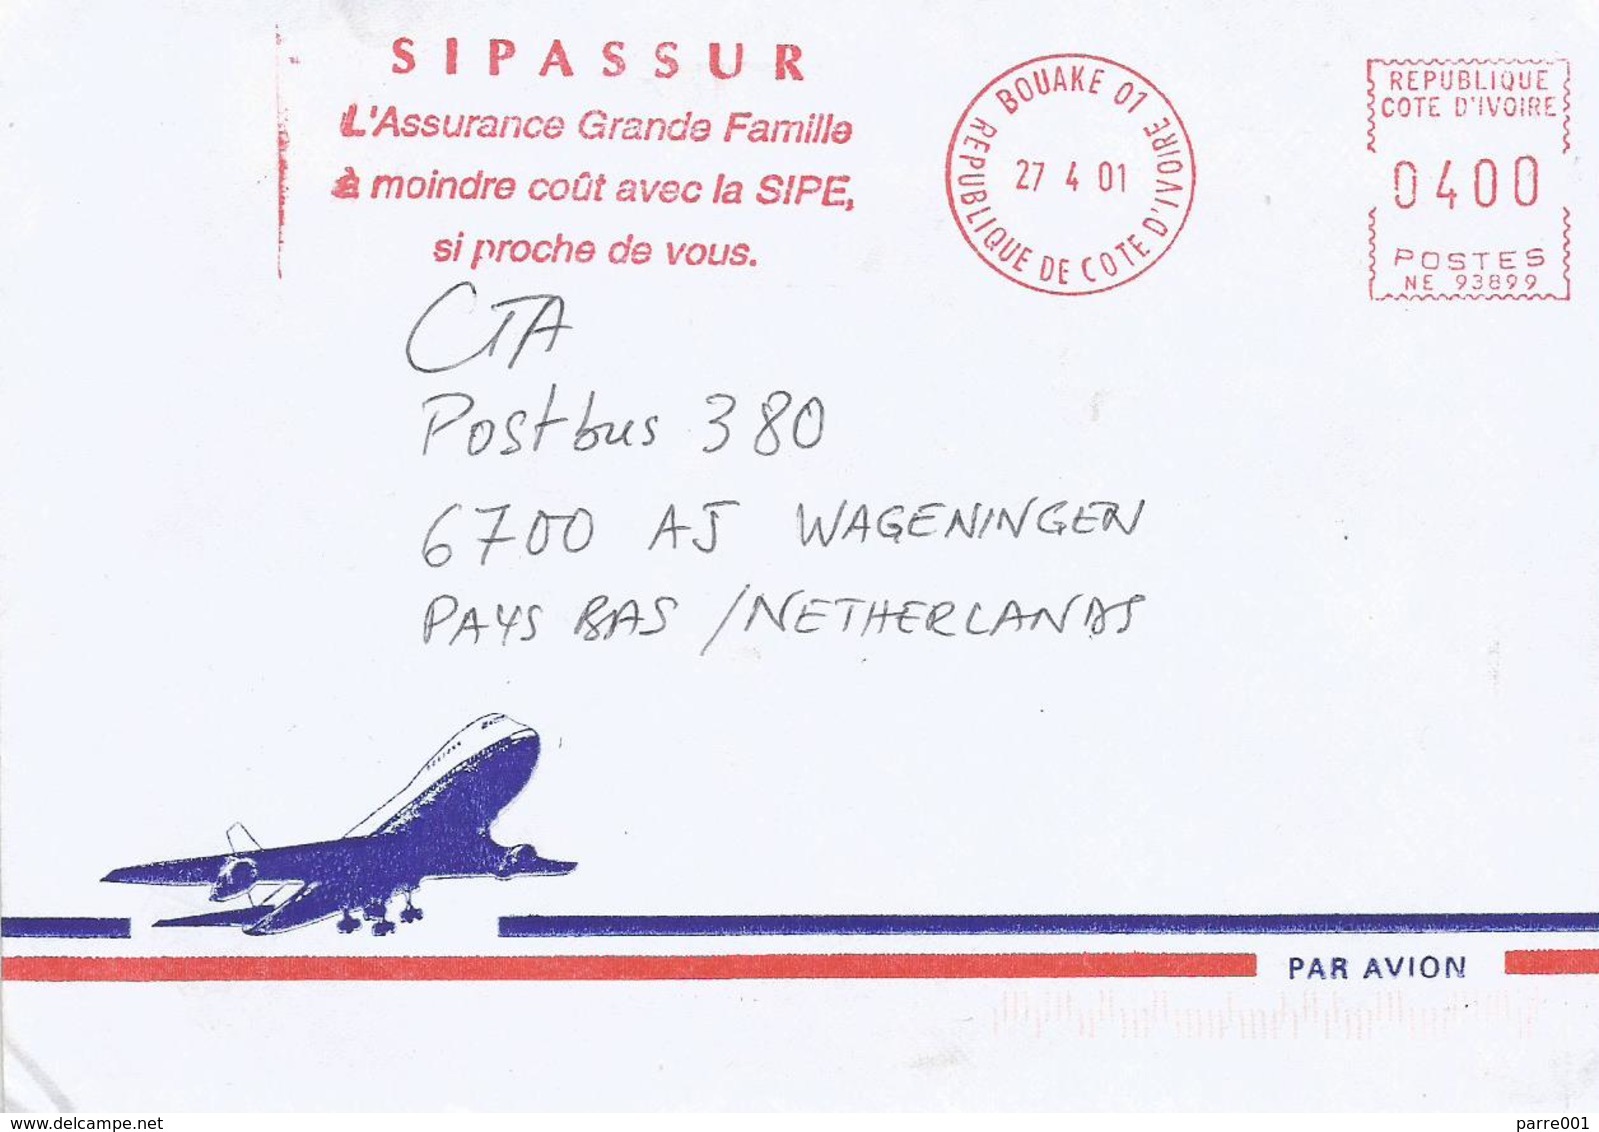 Cote D'Ivoire Ivory Coast 2001 Bouake 01 Post Office Meter Secap “NE” 93899 Insurance Slogan EMA Cover - Ivoorkust (1960-...)